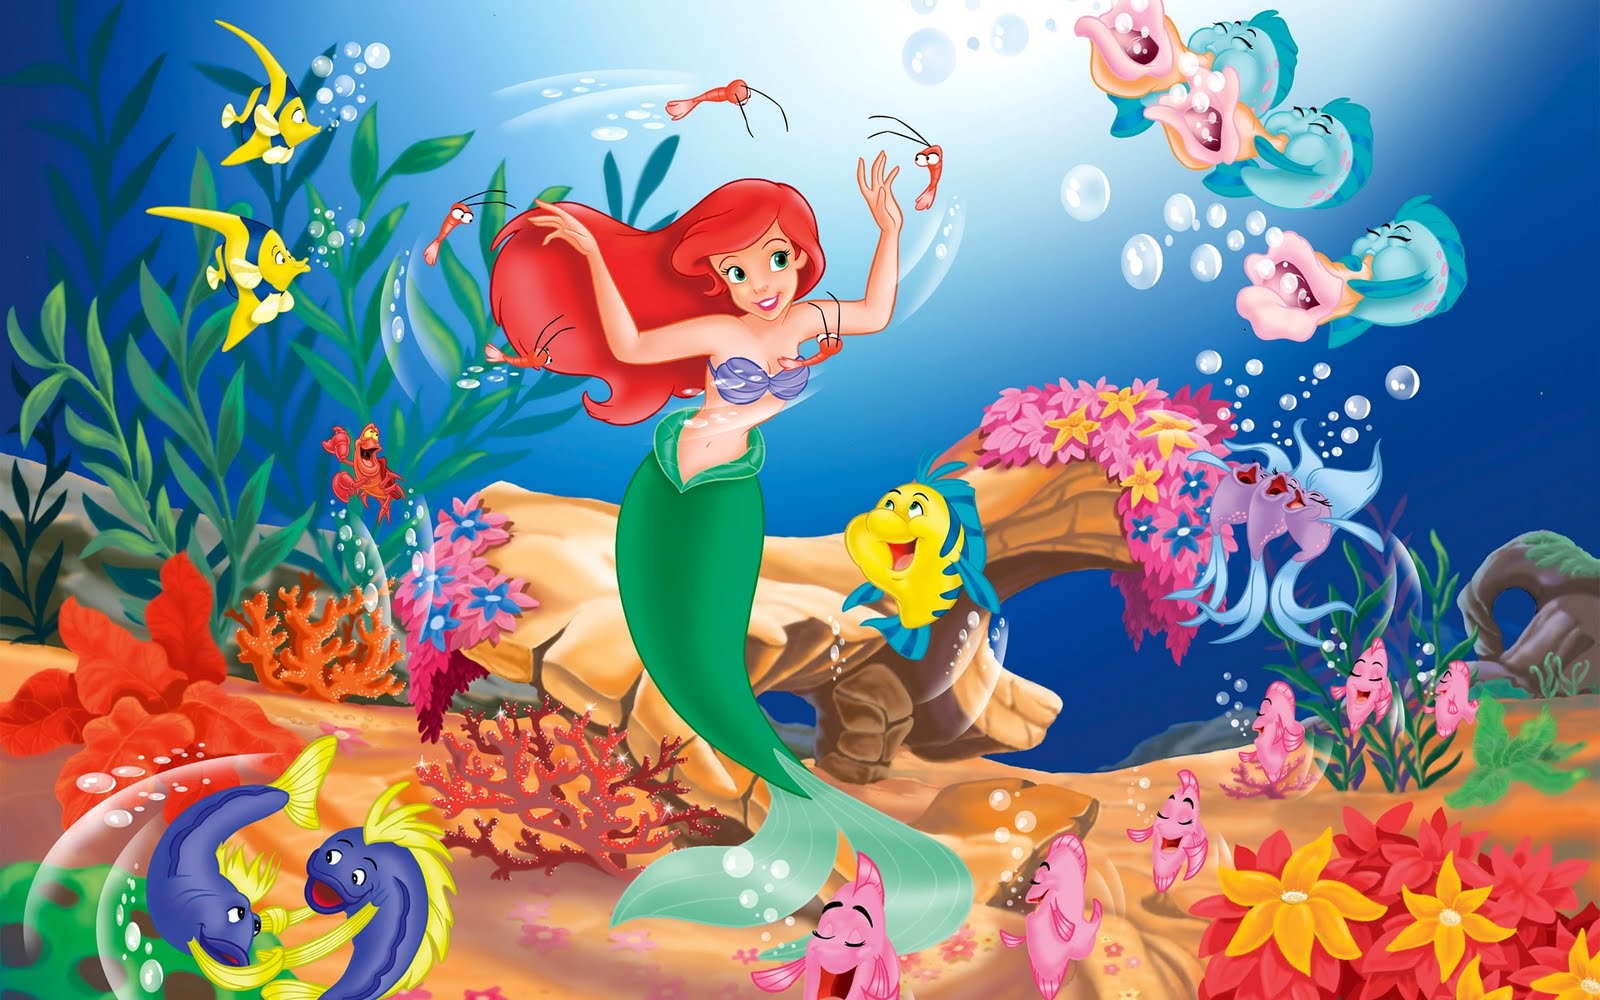 Caricaturas muy tiernas - Little mermaid cartoon